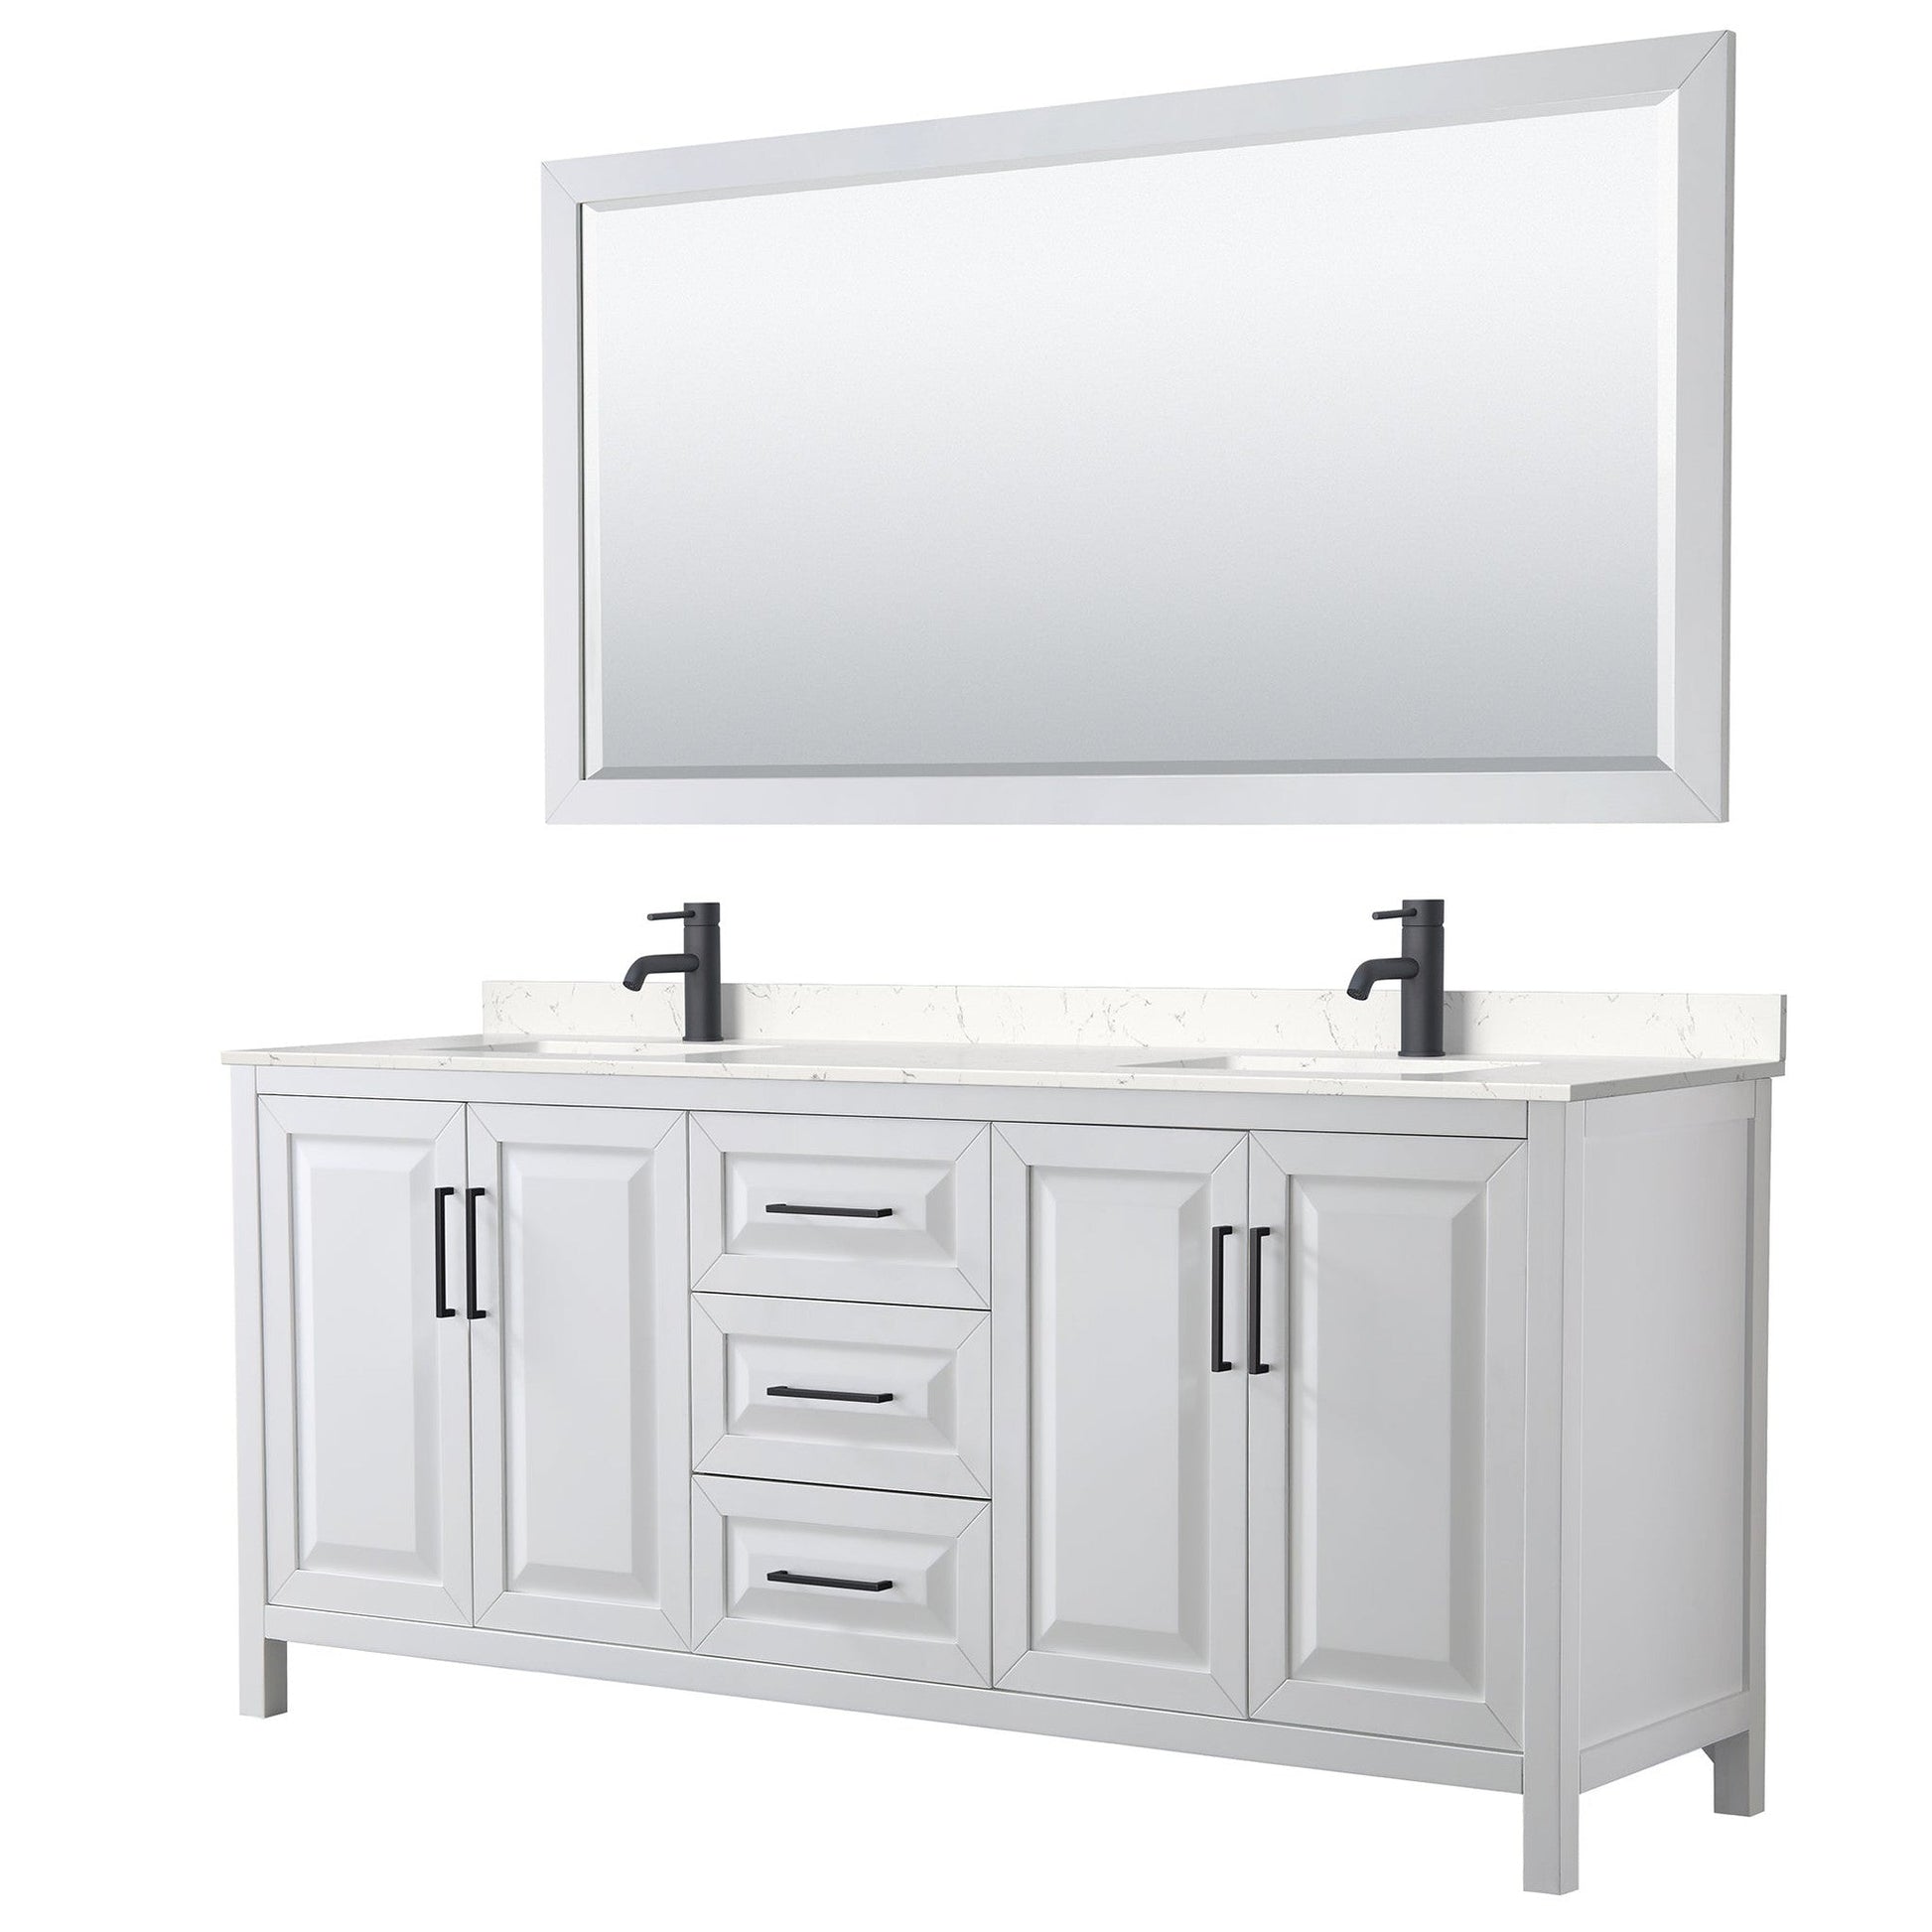 Daria 80" Double Bathroom Vanity in White, Carrara Cultured Marble Countertop, Undermount Square Sinks, Matte Black Trim, 70" Mirror